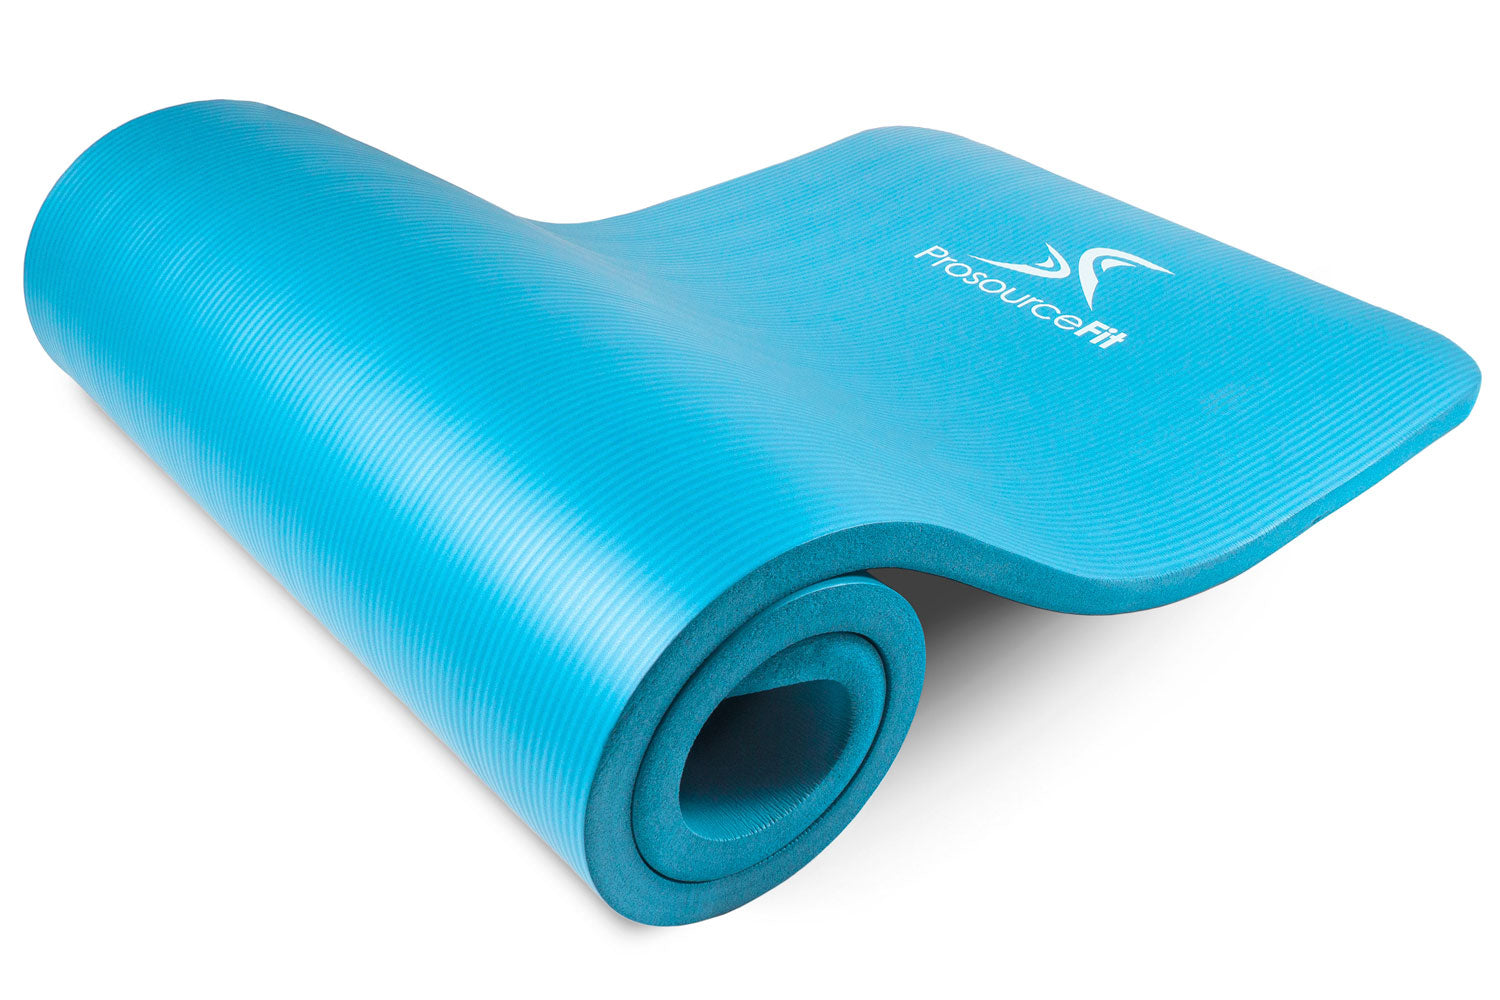 Boldfit Yoga Mat with Carrying Strap: Buy box of 1.0 Yoga Mat at